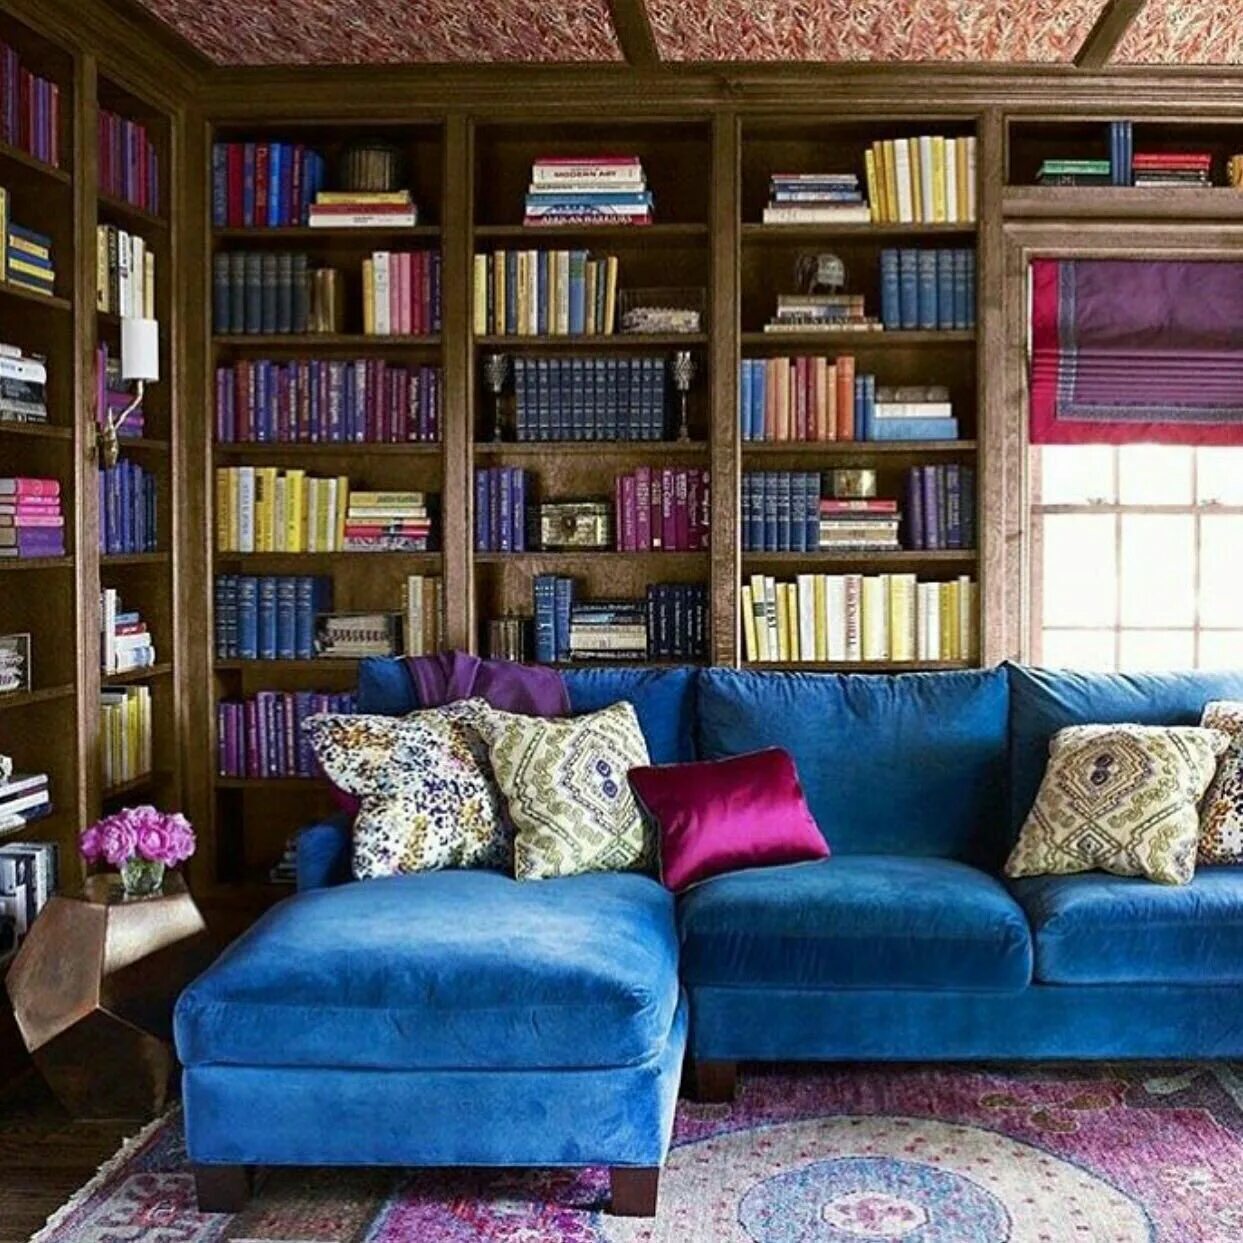 Sweet home библиотеки. Уютная библиотека. Диван для библиотеки. Домашняя библиотека с диваном. Библиотека в Восточном стиле.